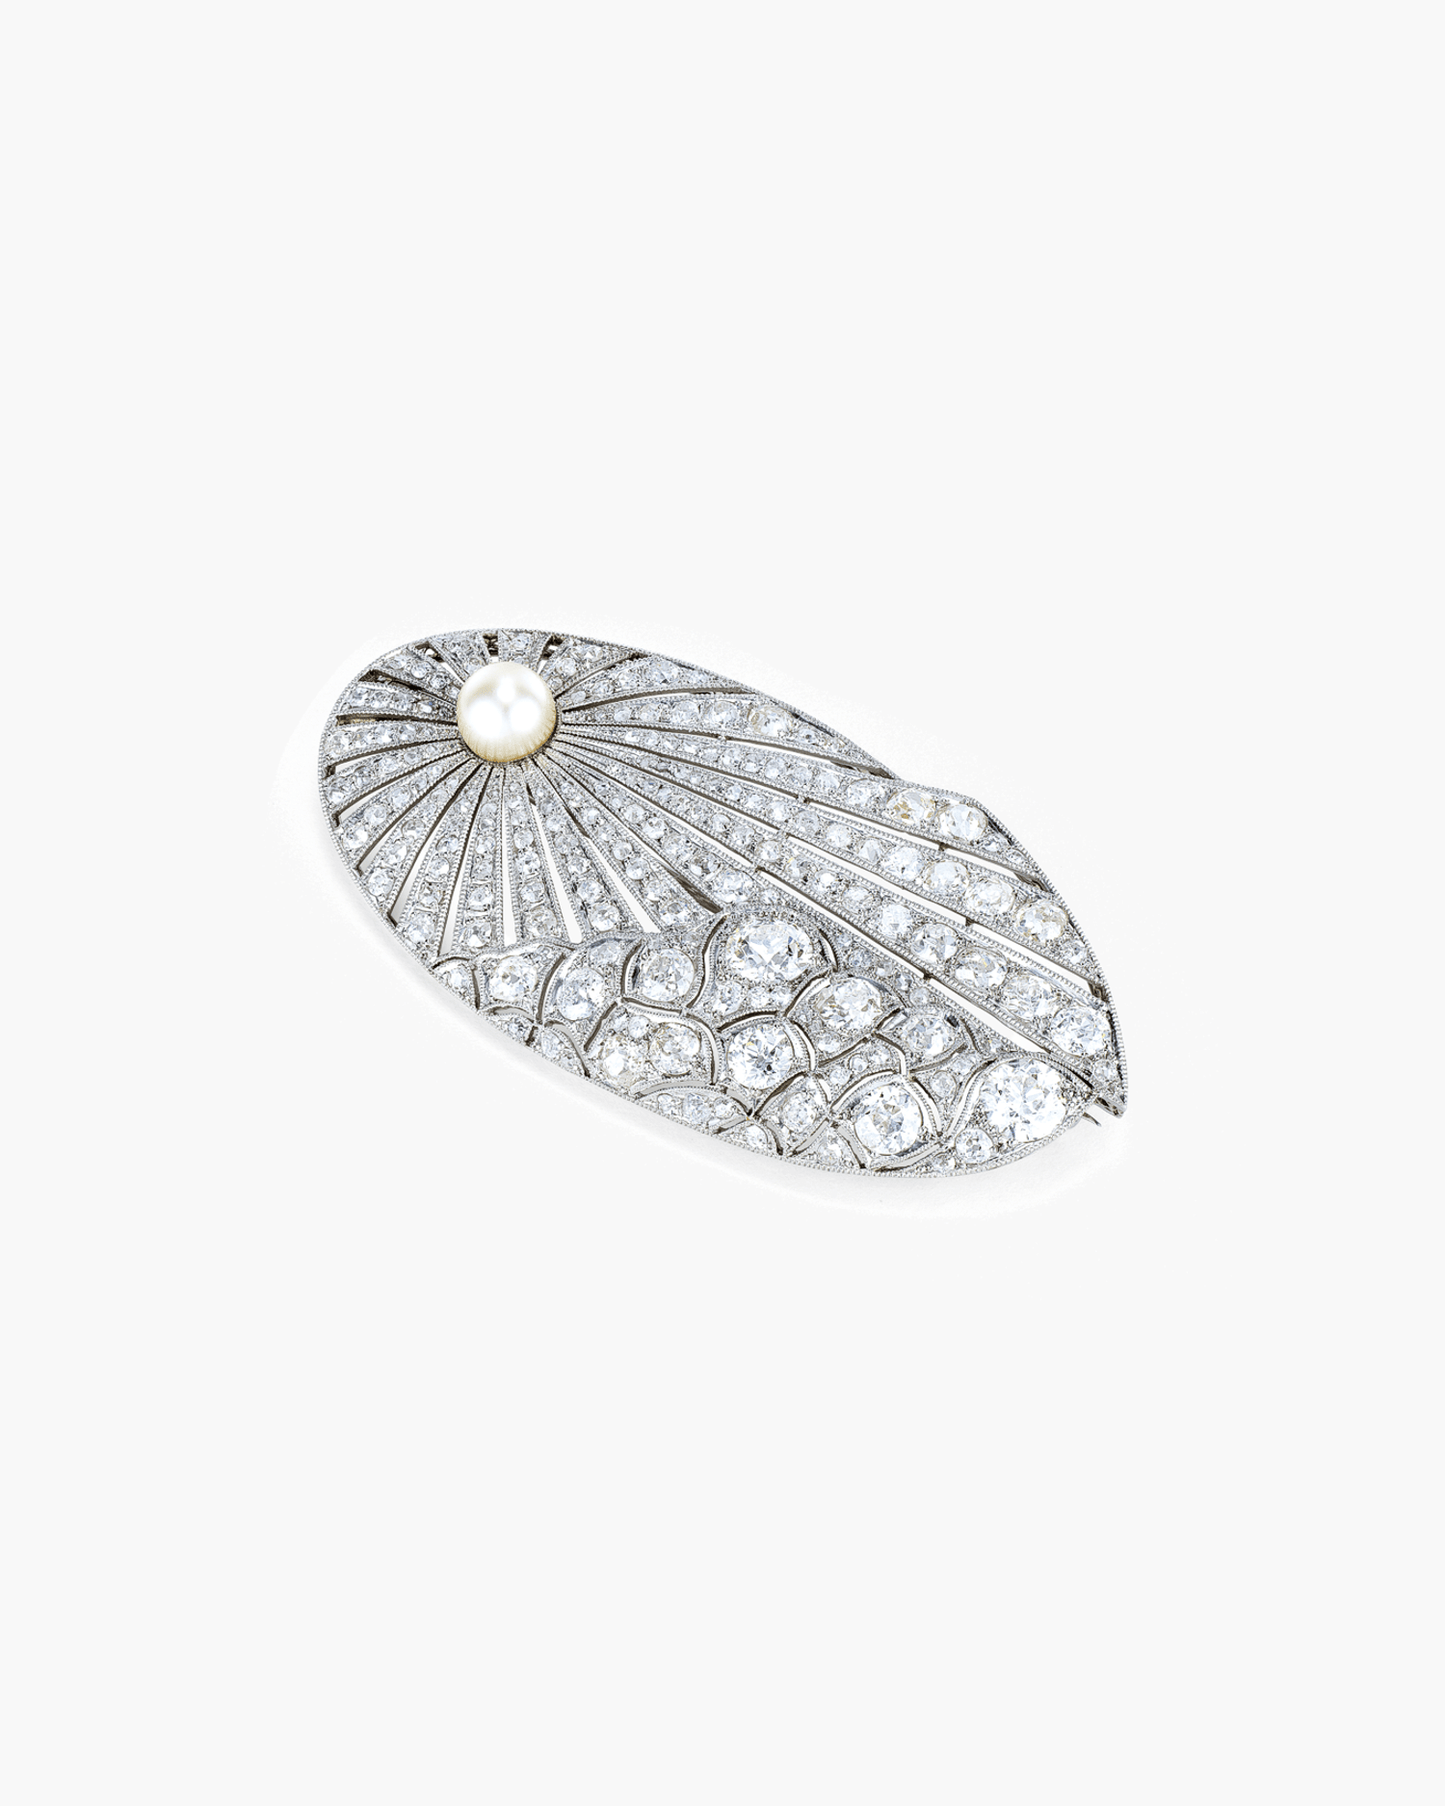 Art Deco Pearl and Diamond Brooch